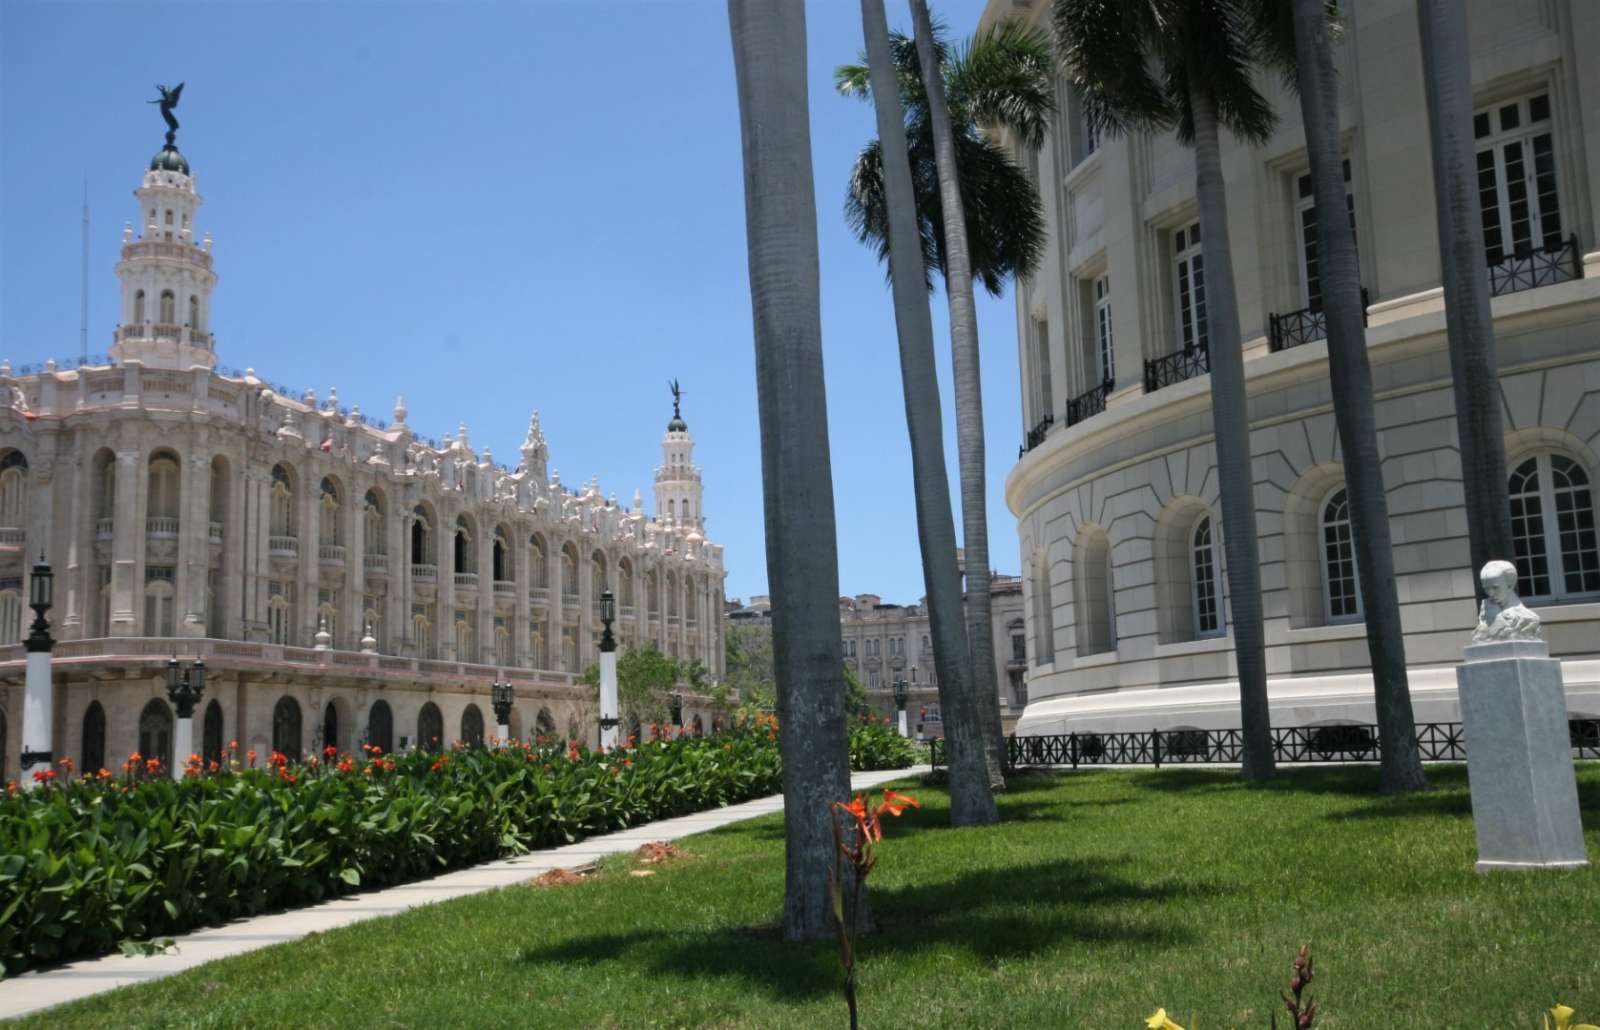 The Capitol and Gran Teatro in Havana, Cuba